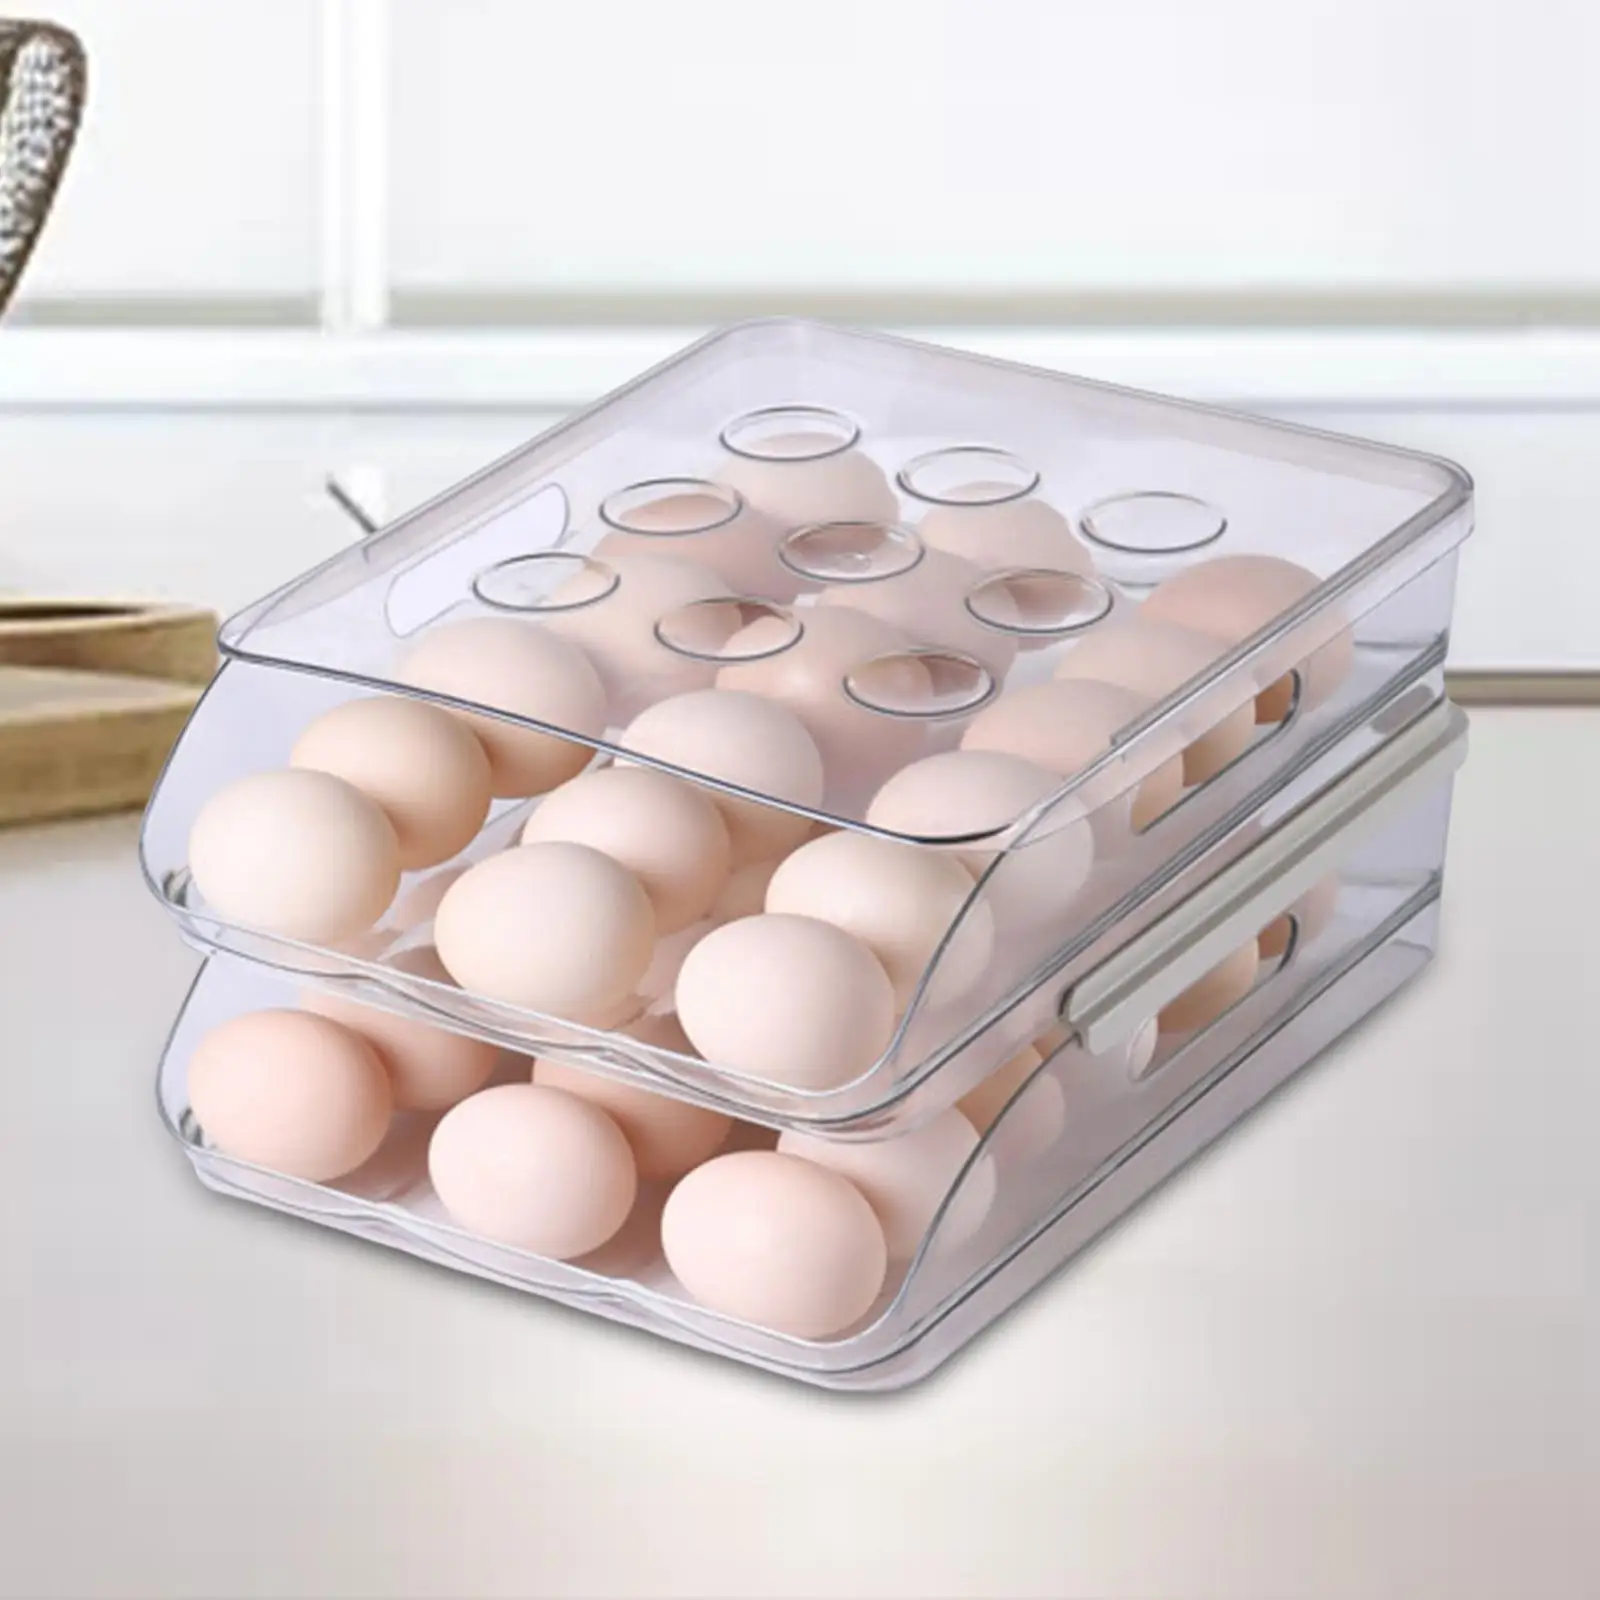 egg Storage Box with Lid Egg Container Fridge Organizer Slide Design Egg Holder Automatic Rolling for Household Kitchen